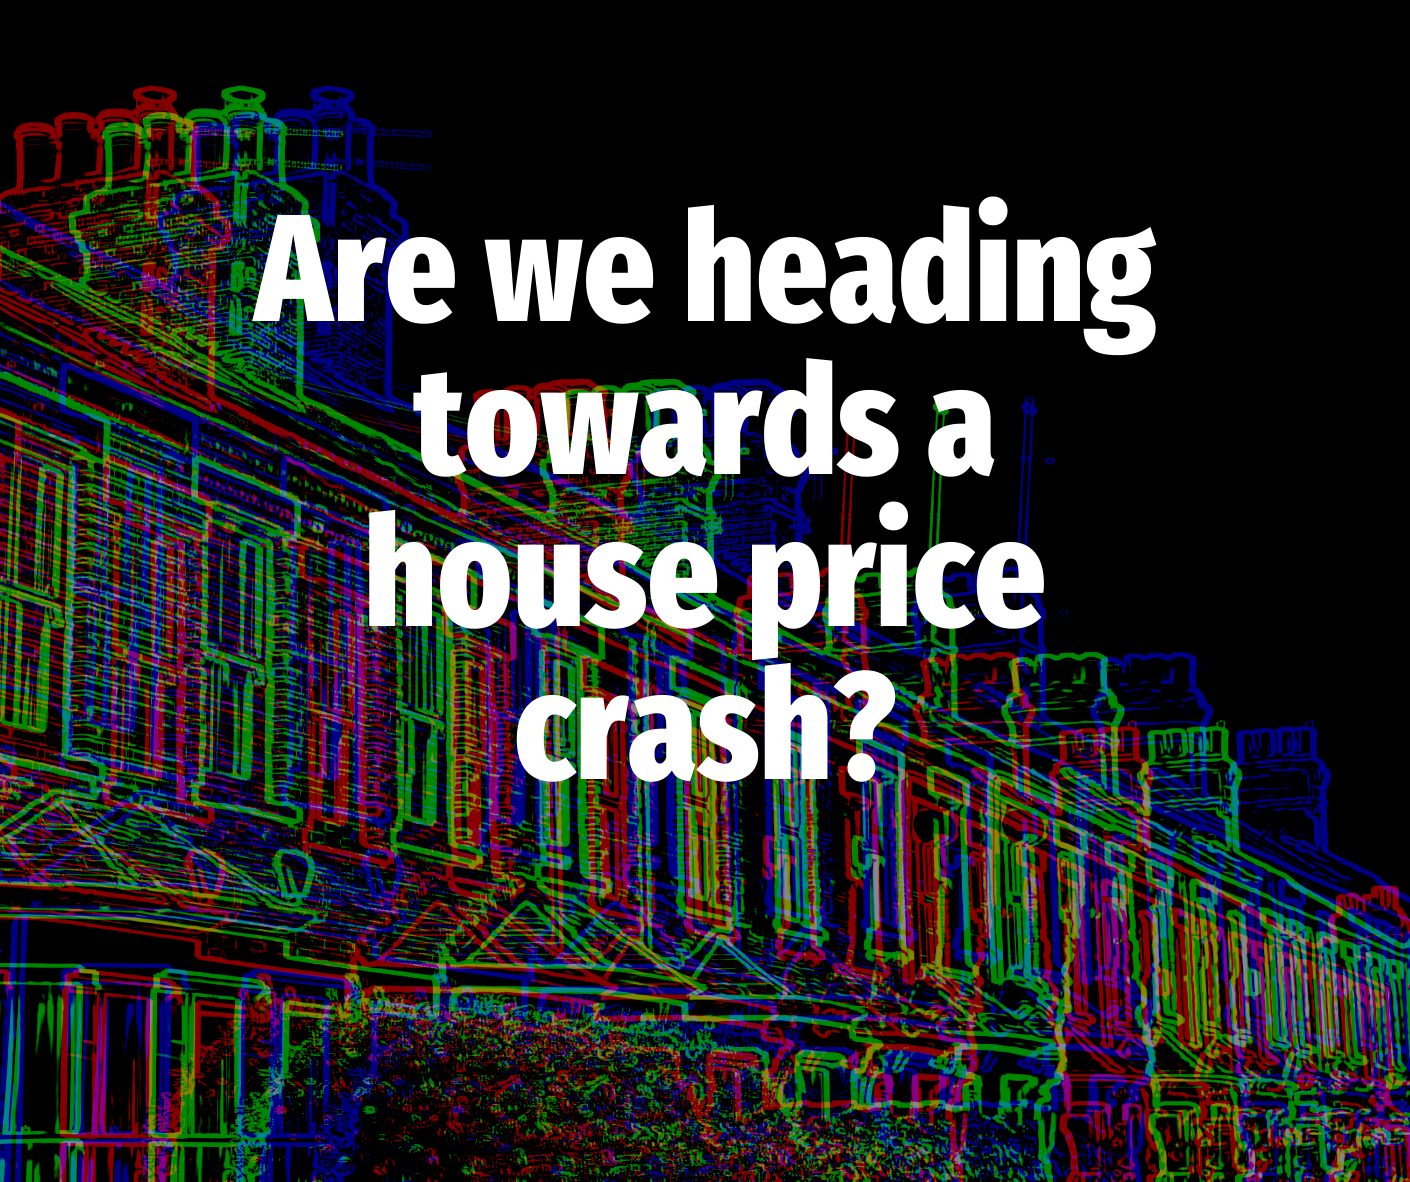 IS ISLEWORTH HEADING TOWARDS A HOUSE PRICE CRASH?